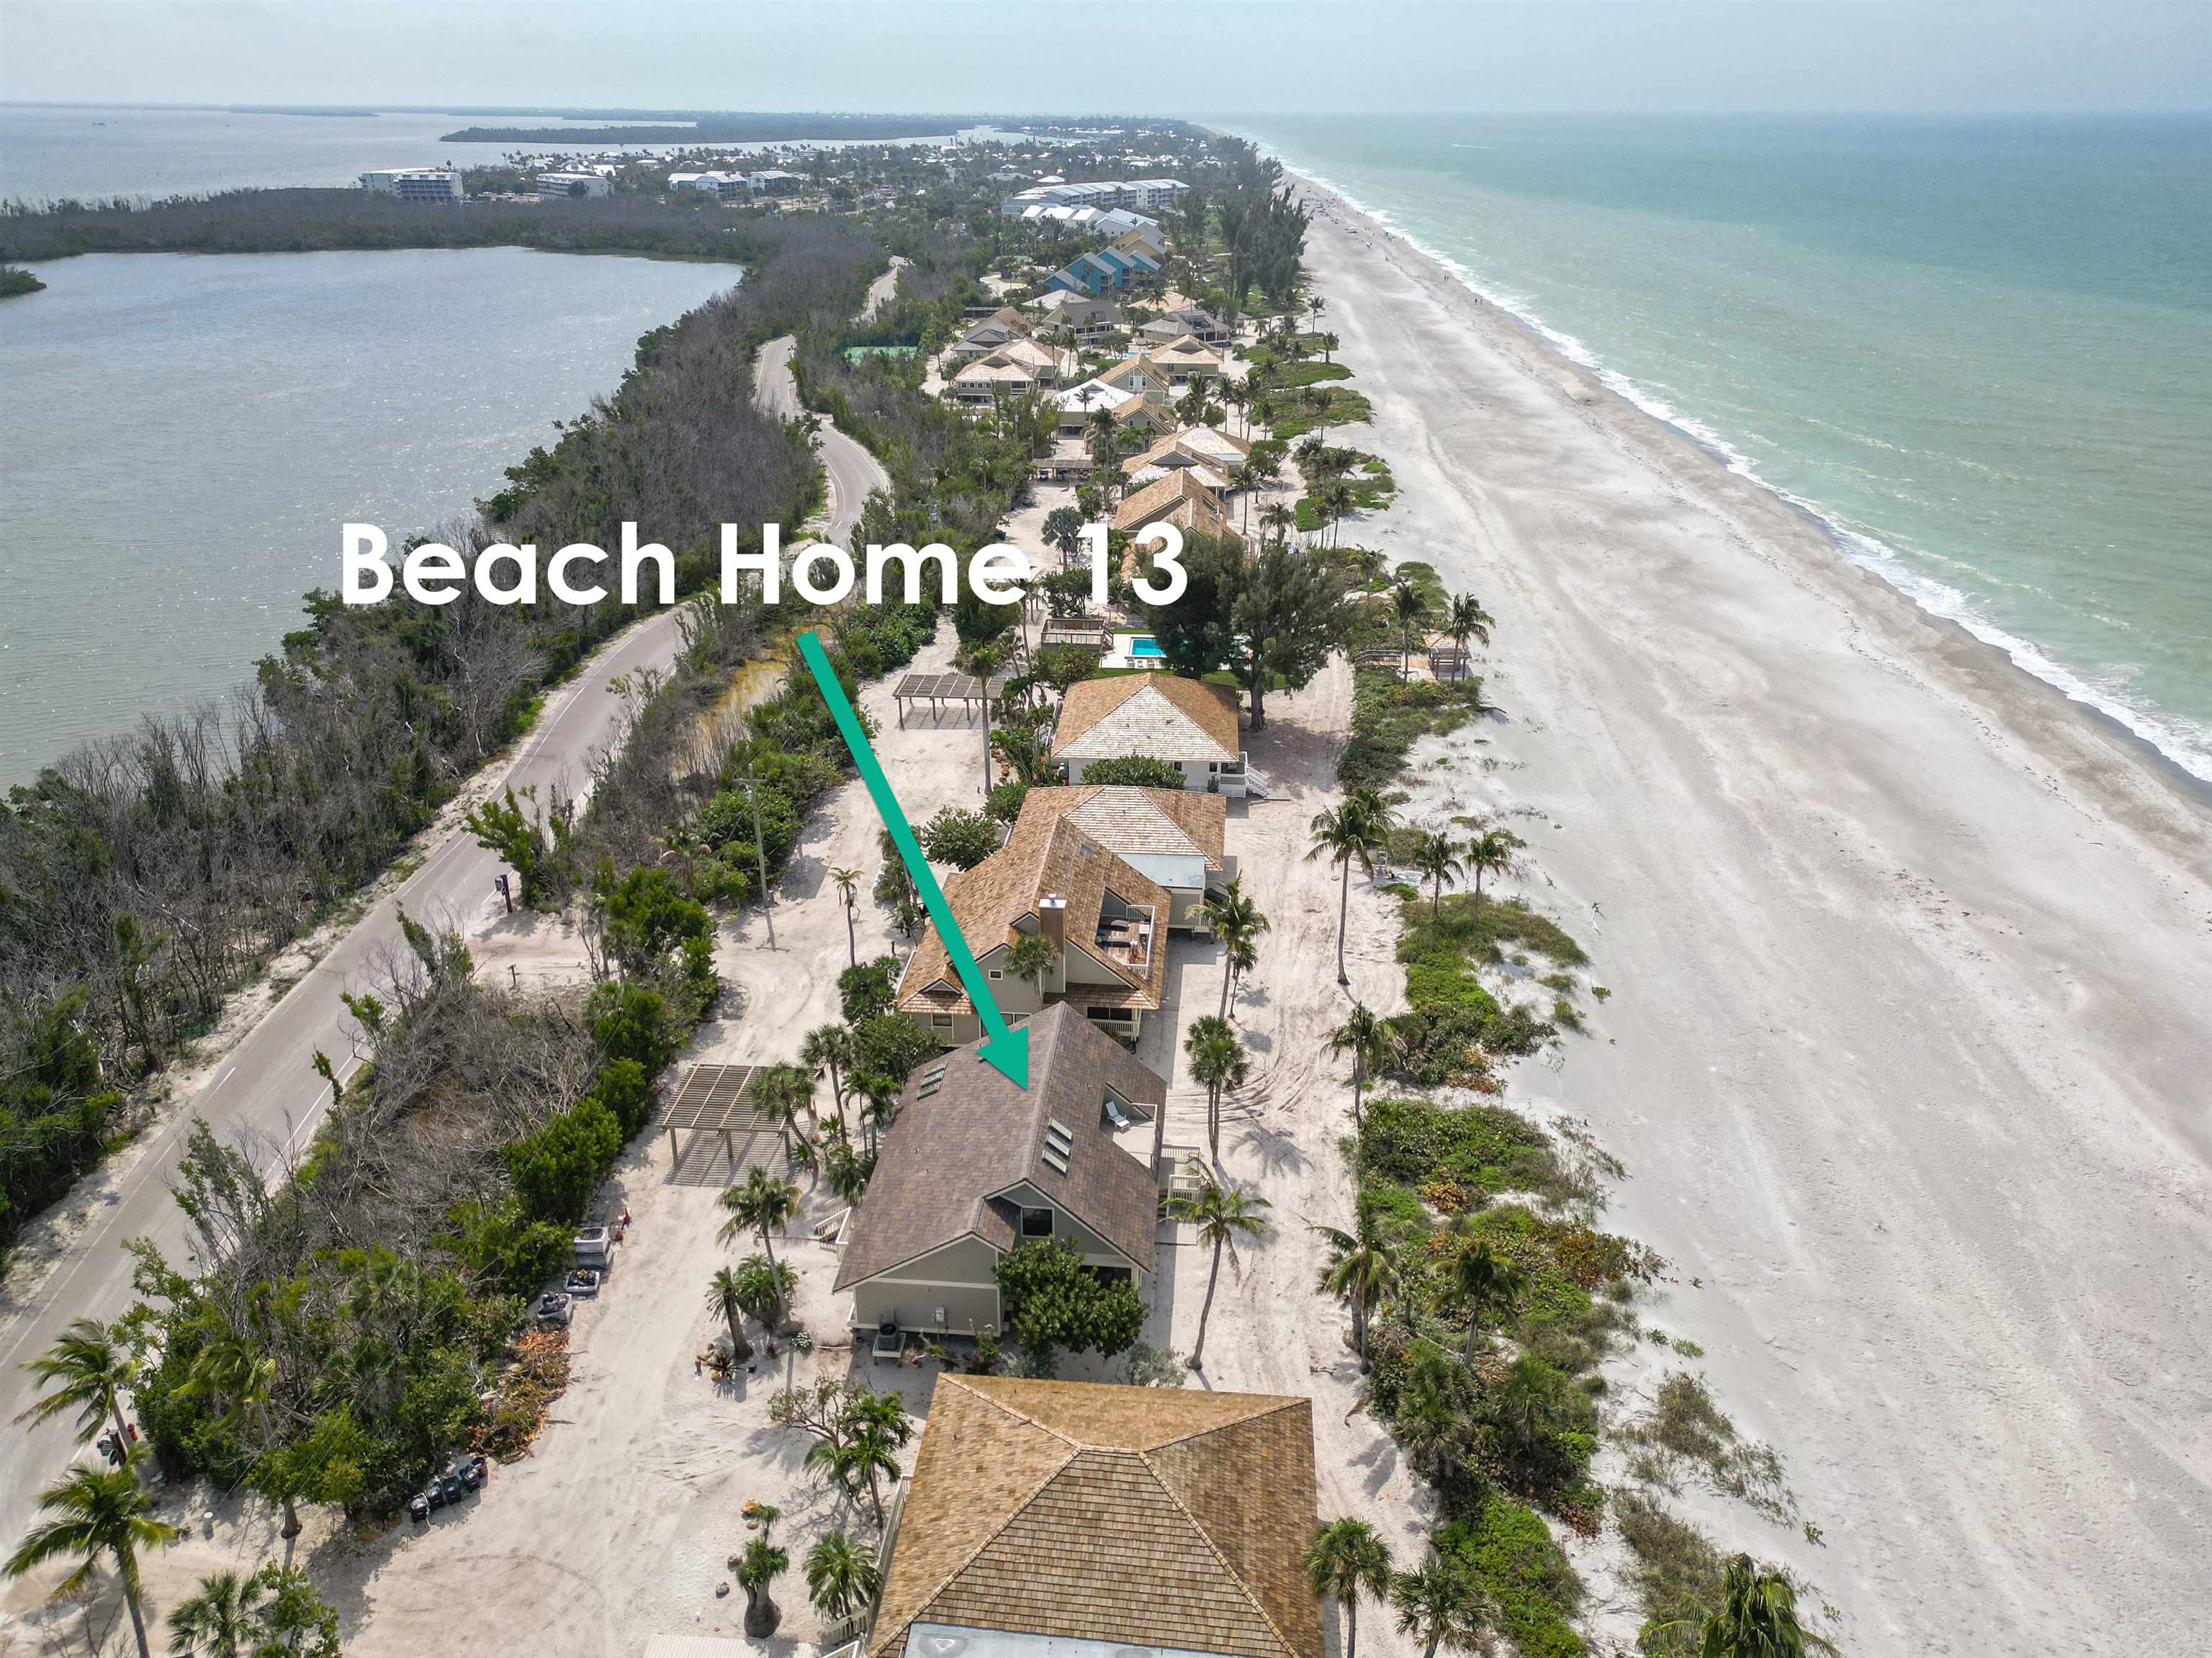 13 Beach Homes #., Captiva, FL 33924